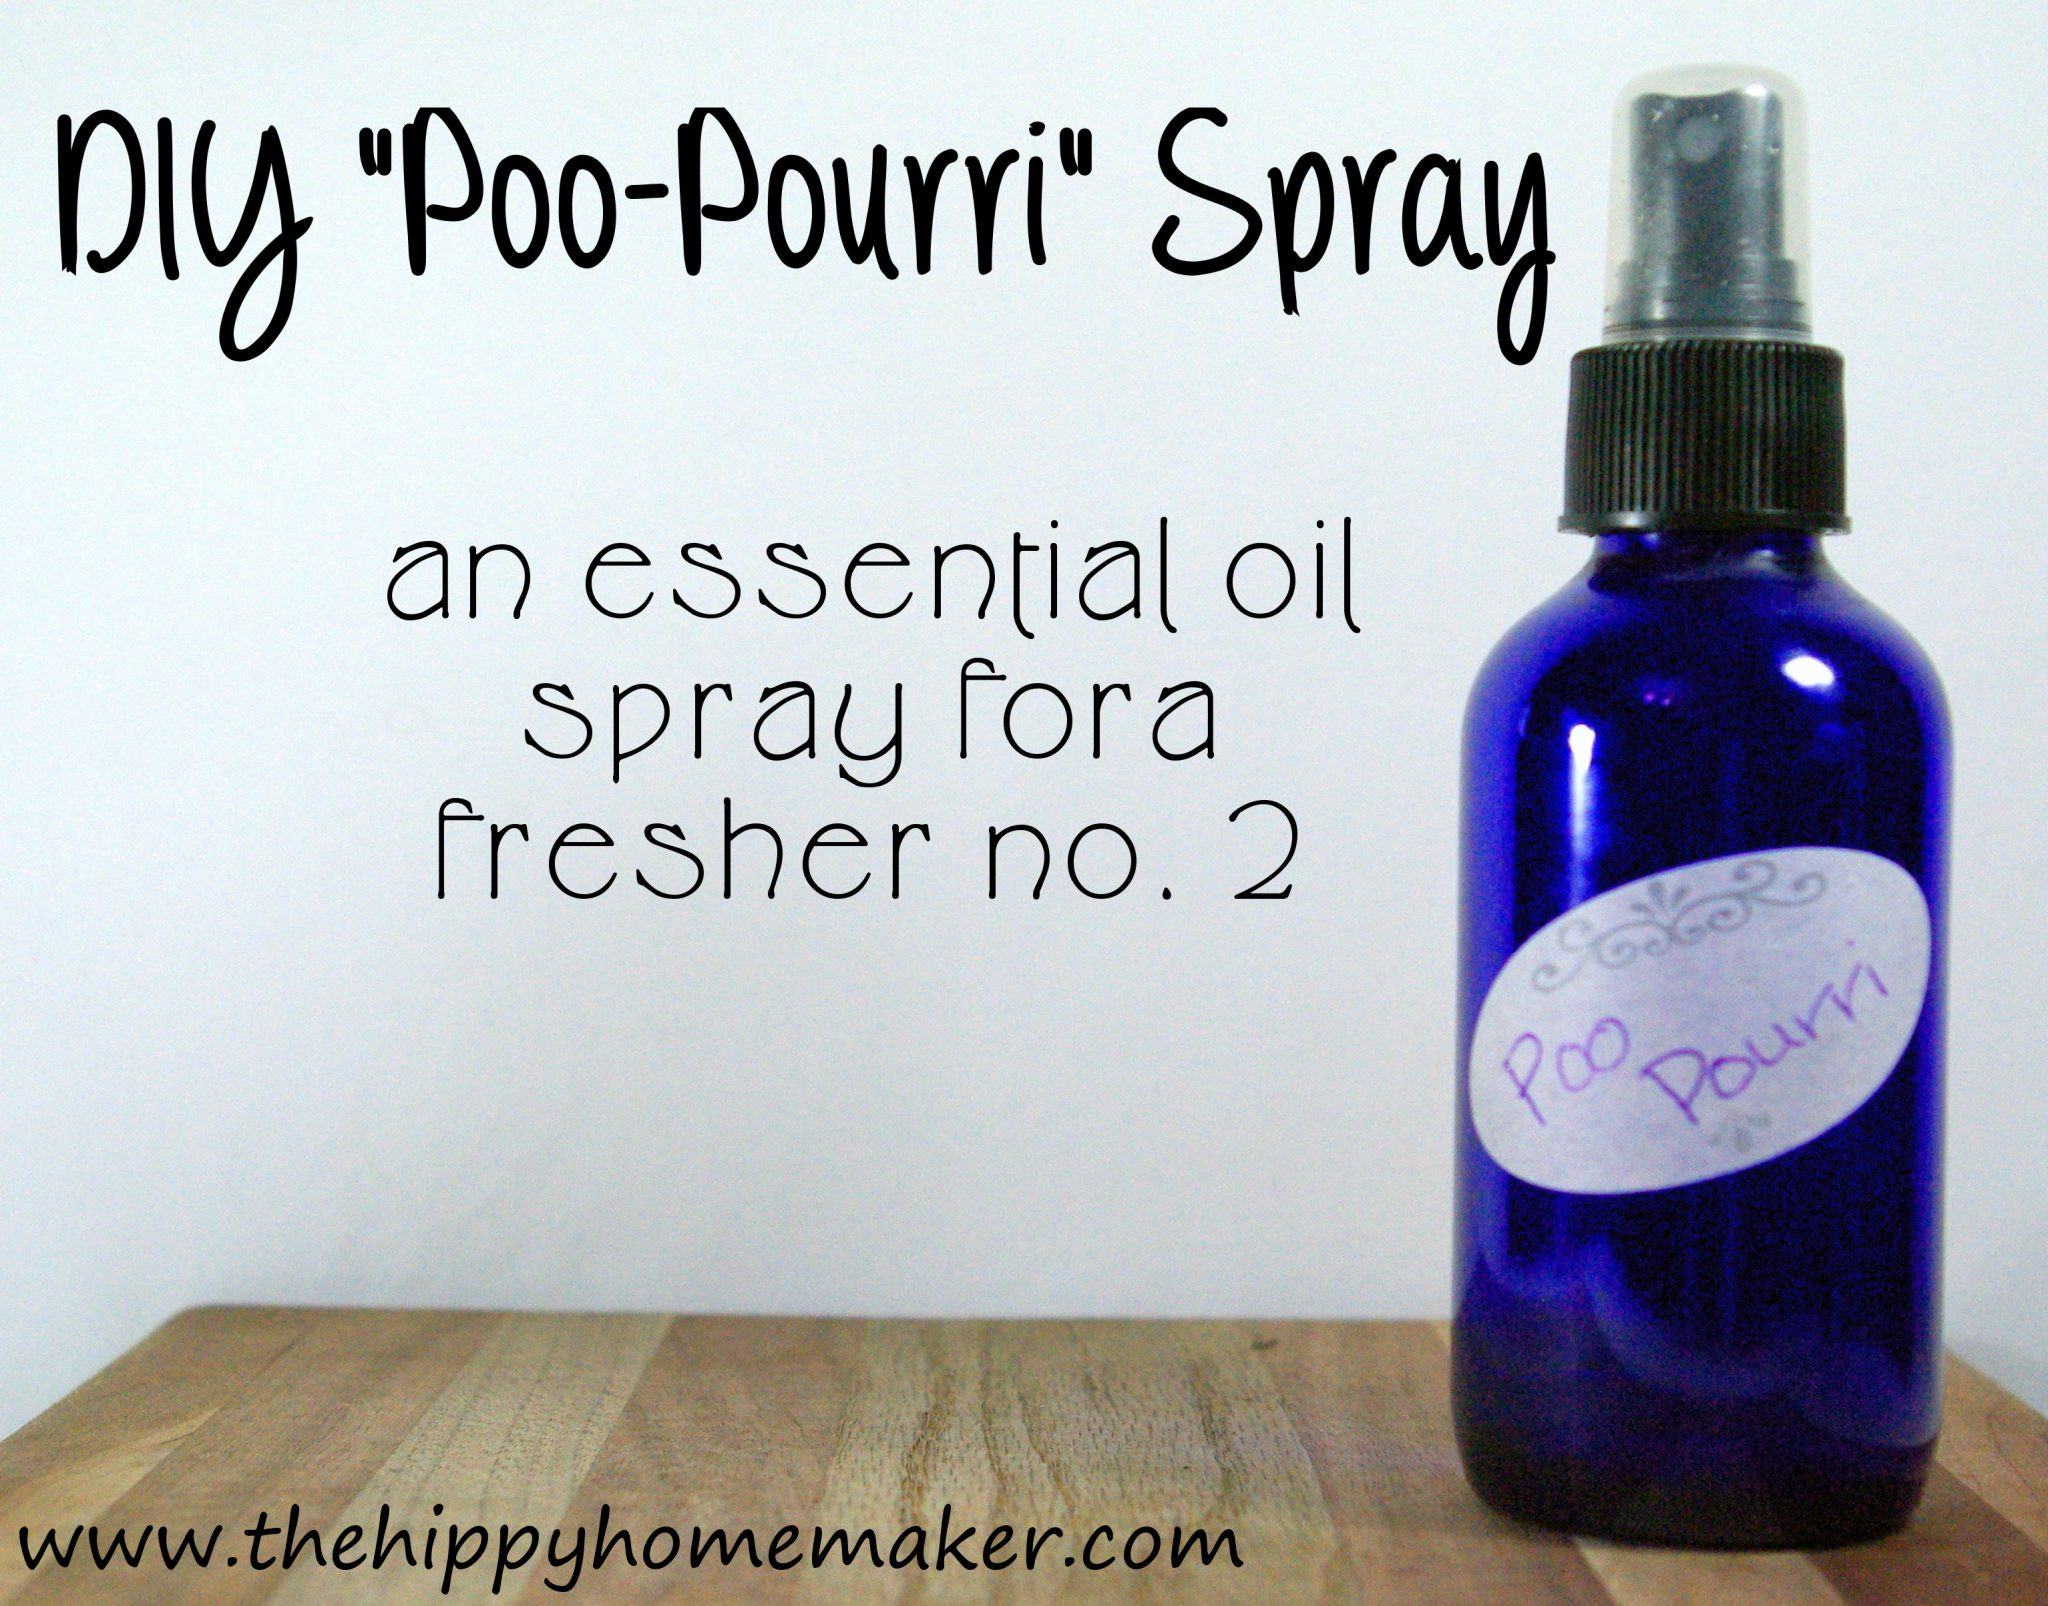 Best ideas about Poo Pourri DIY
. Save or Pin DIY "Poo Pourri" Spray For a Fresher No 2 by Hybrid Rasta Now.